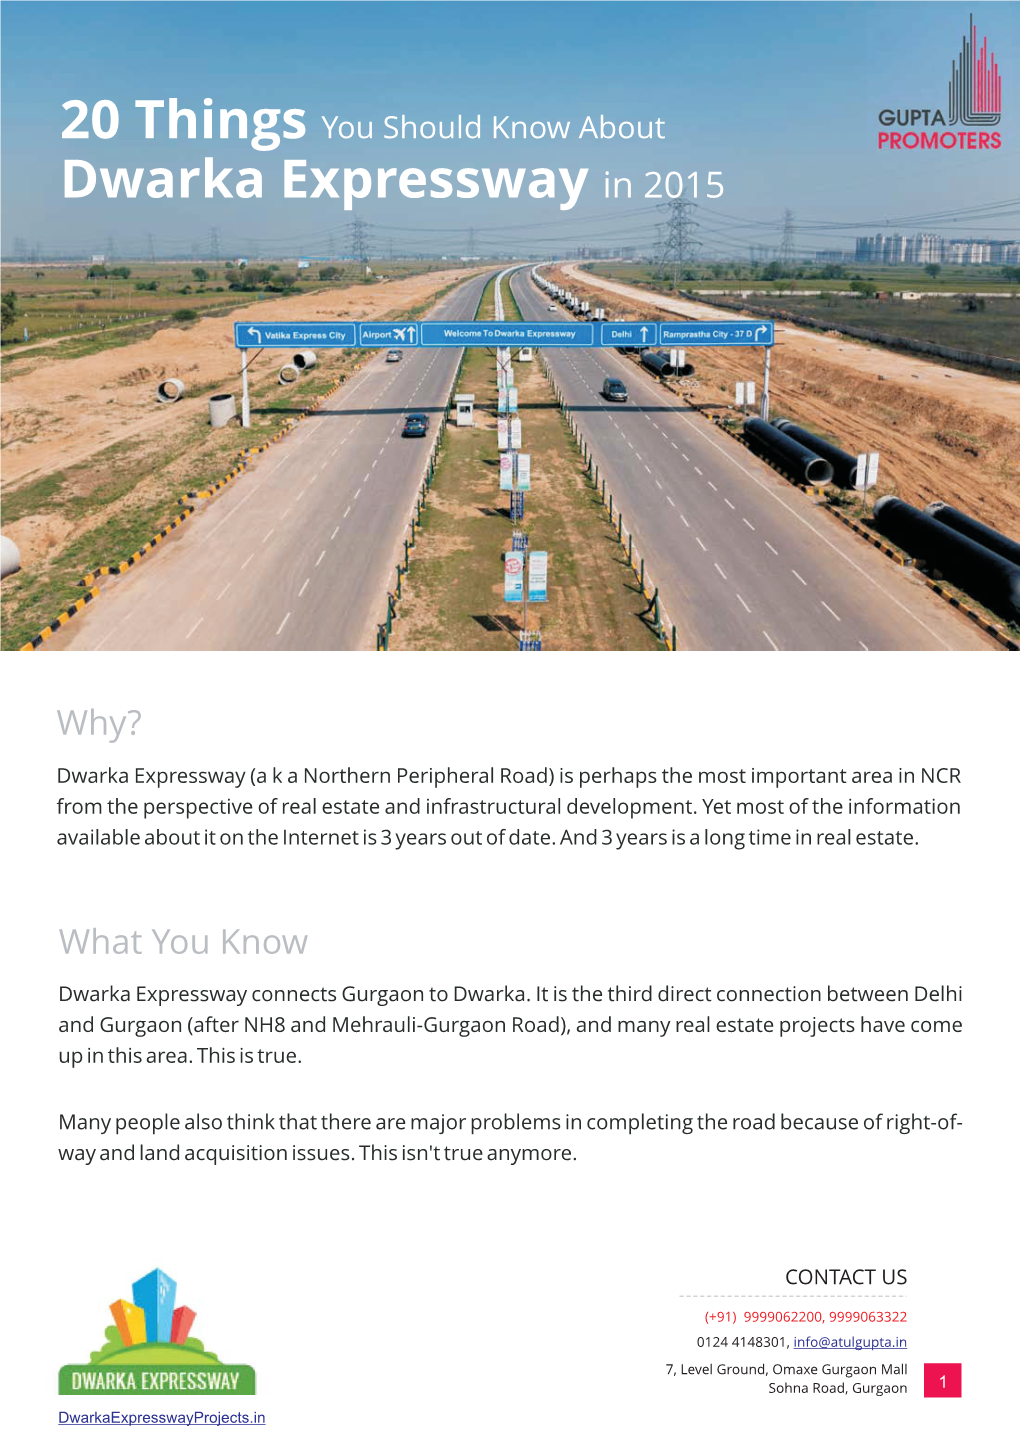 Dwarka Expressway in 2015